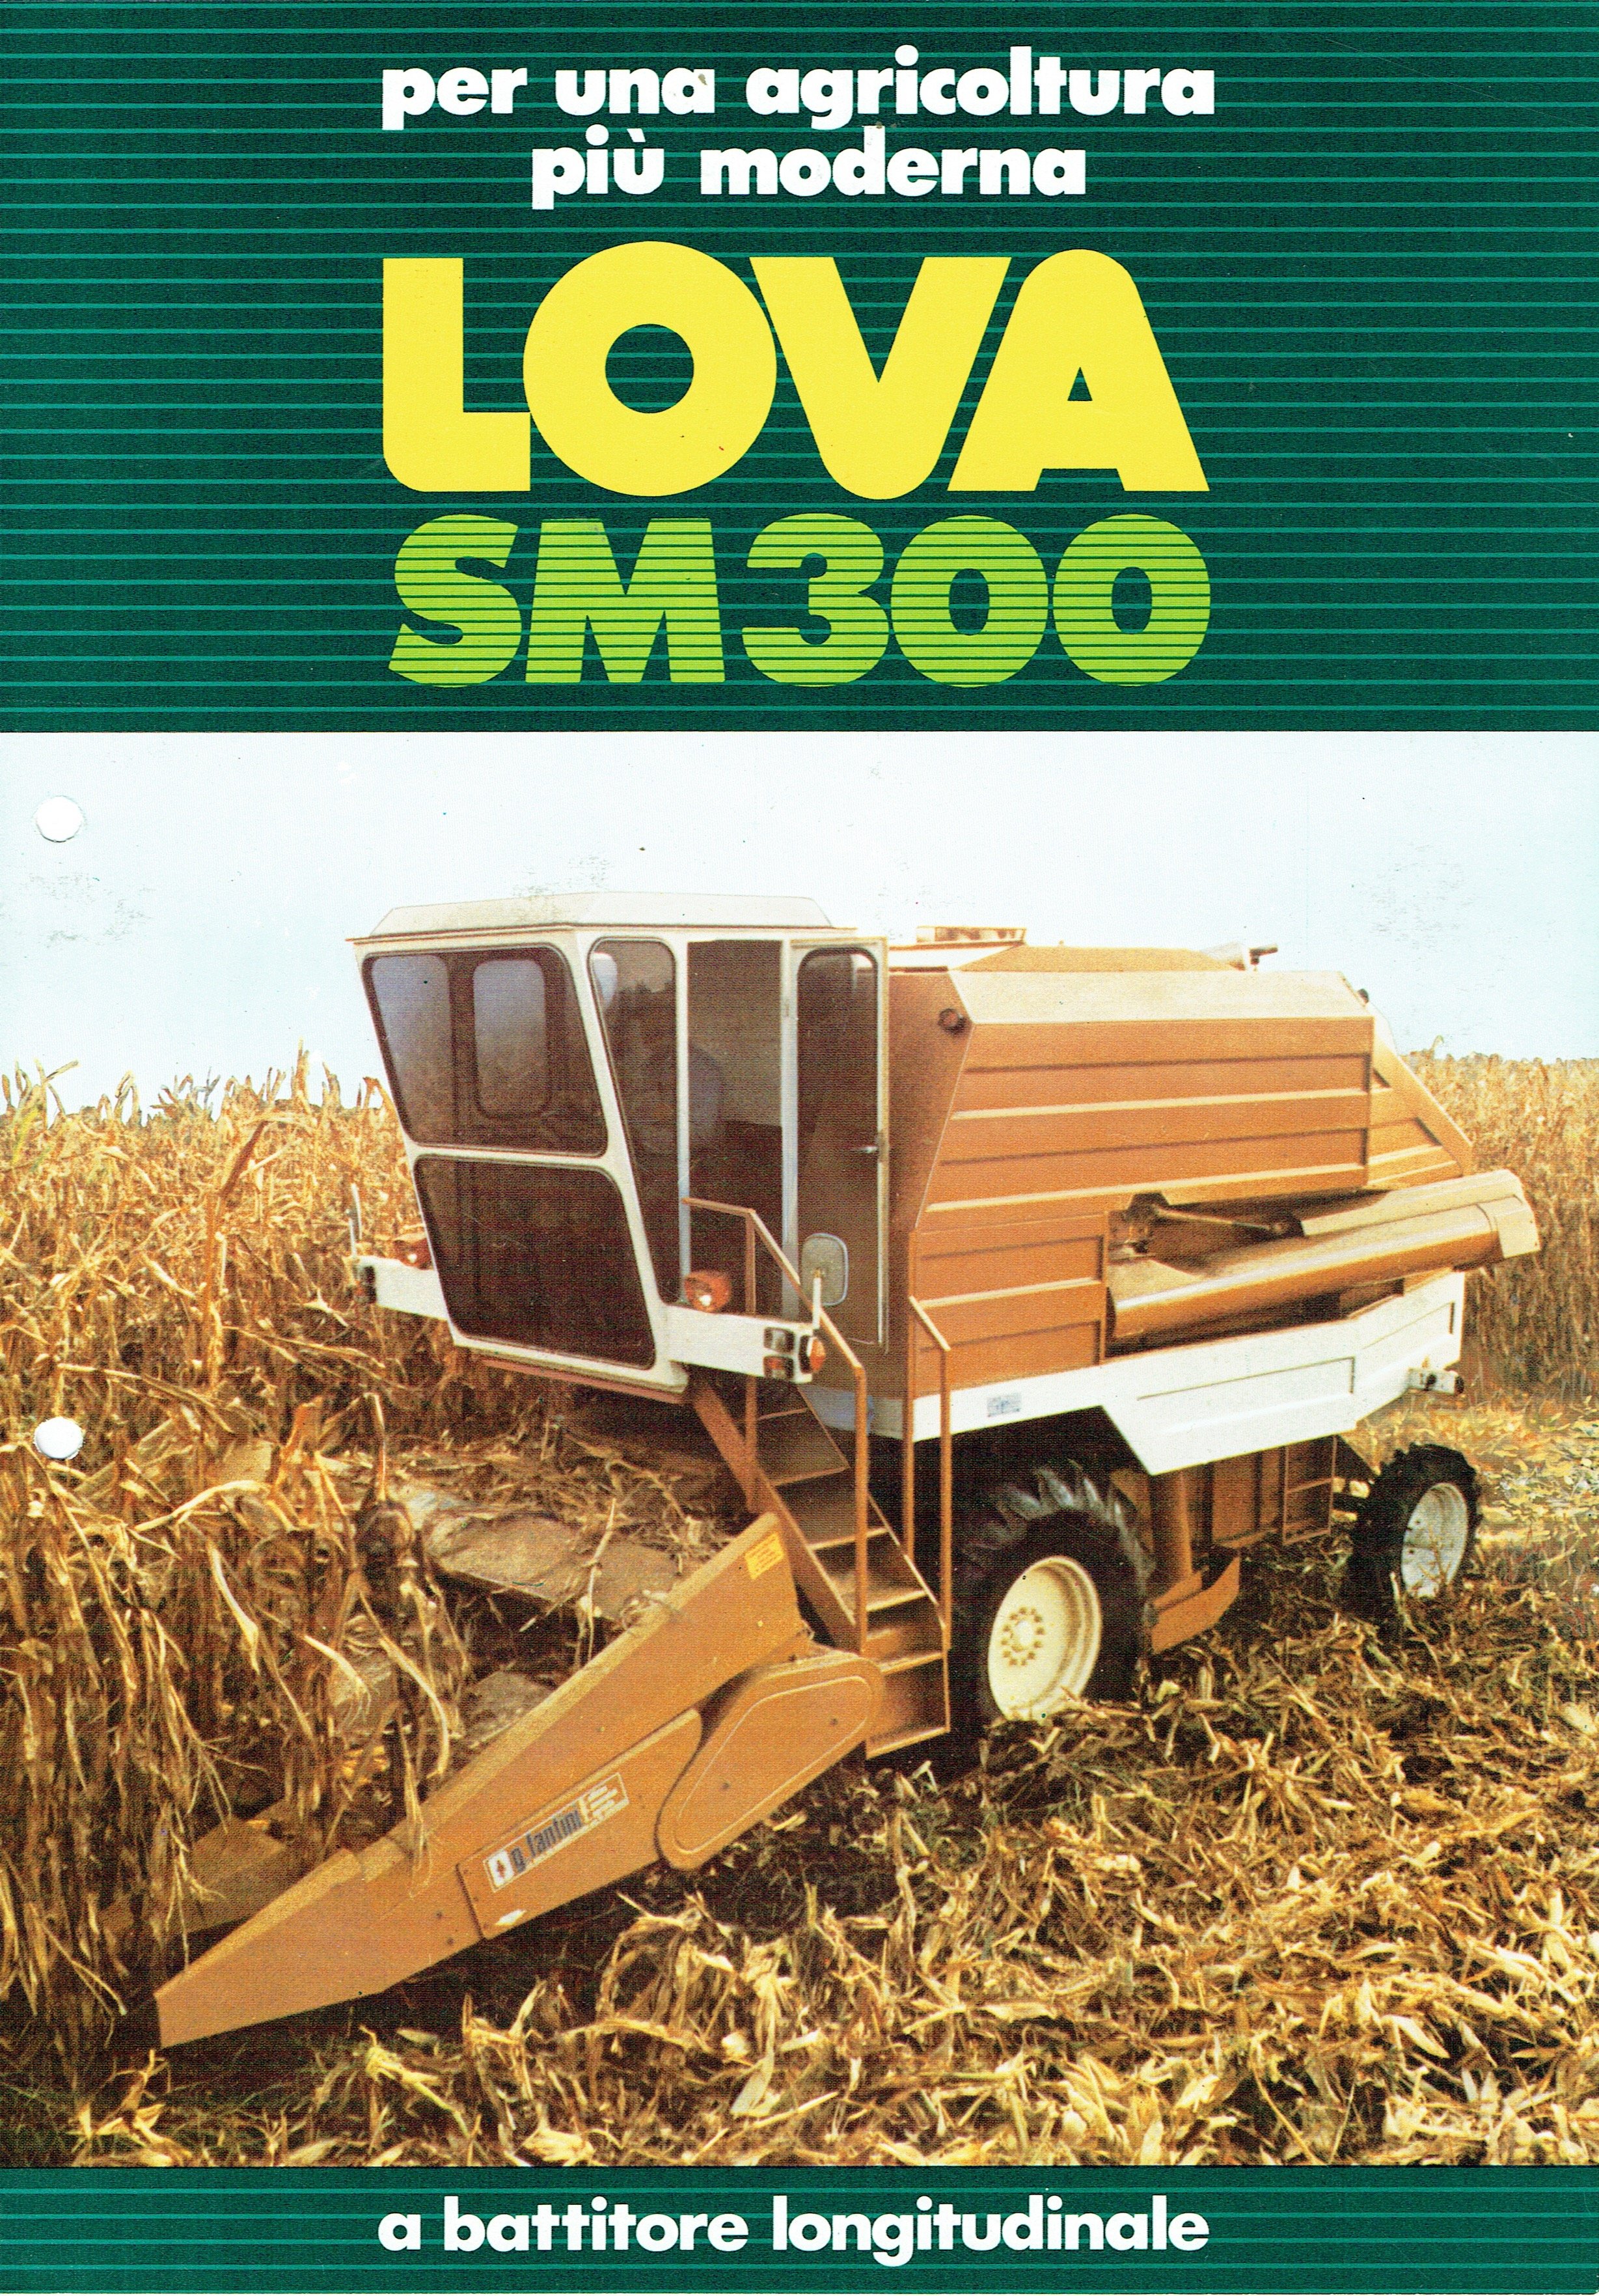 LOVA SM300 (Lova S.p.A. CC BY-NC)